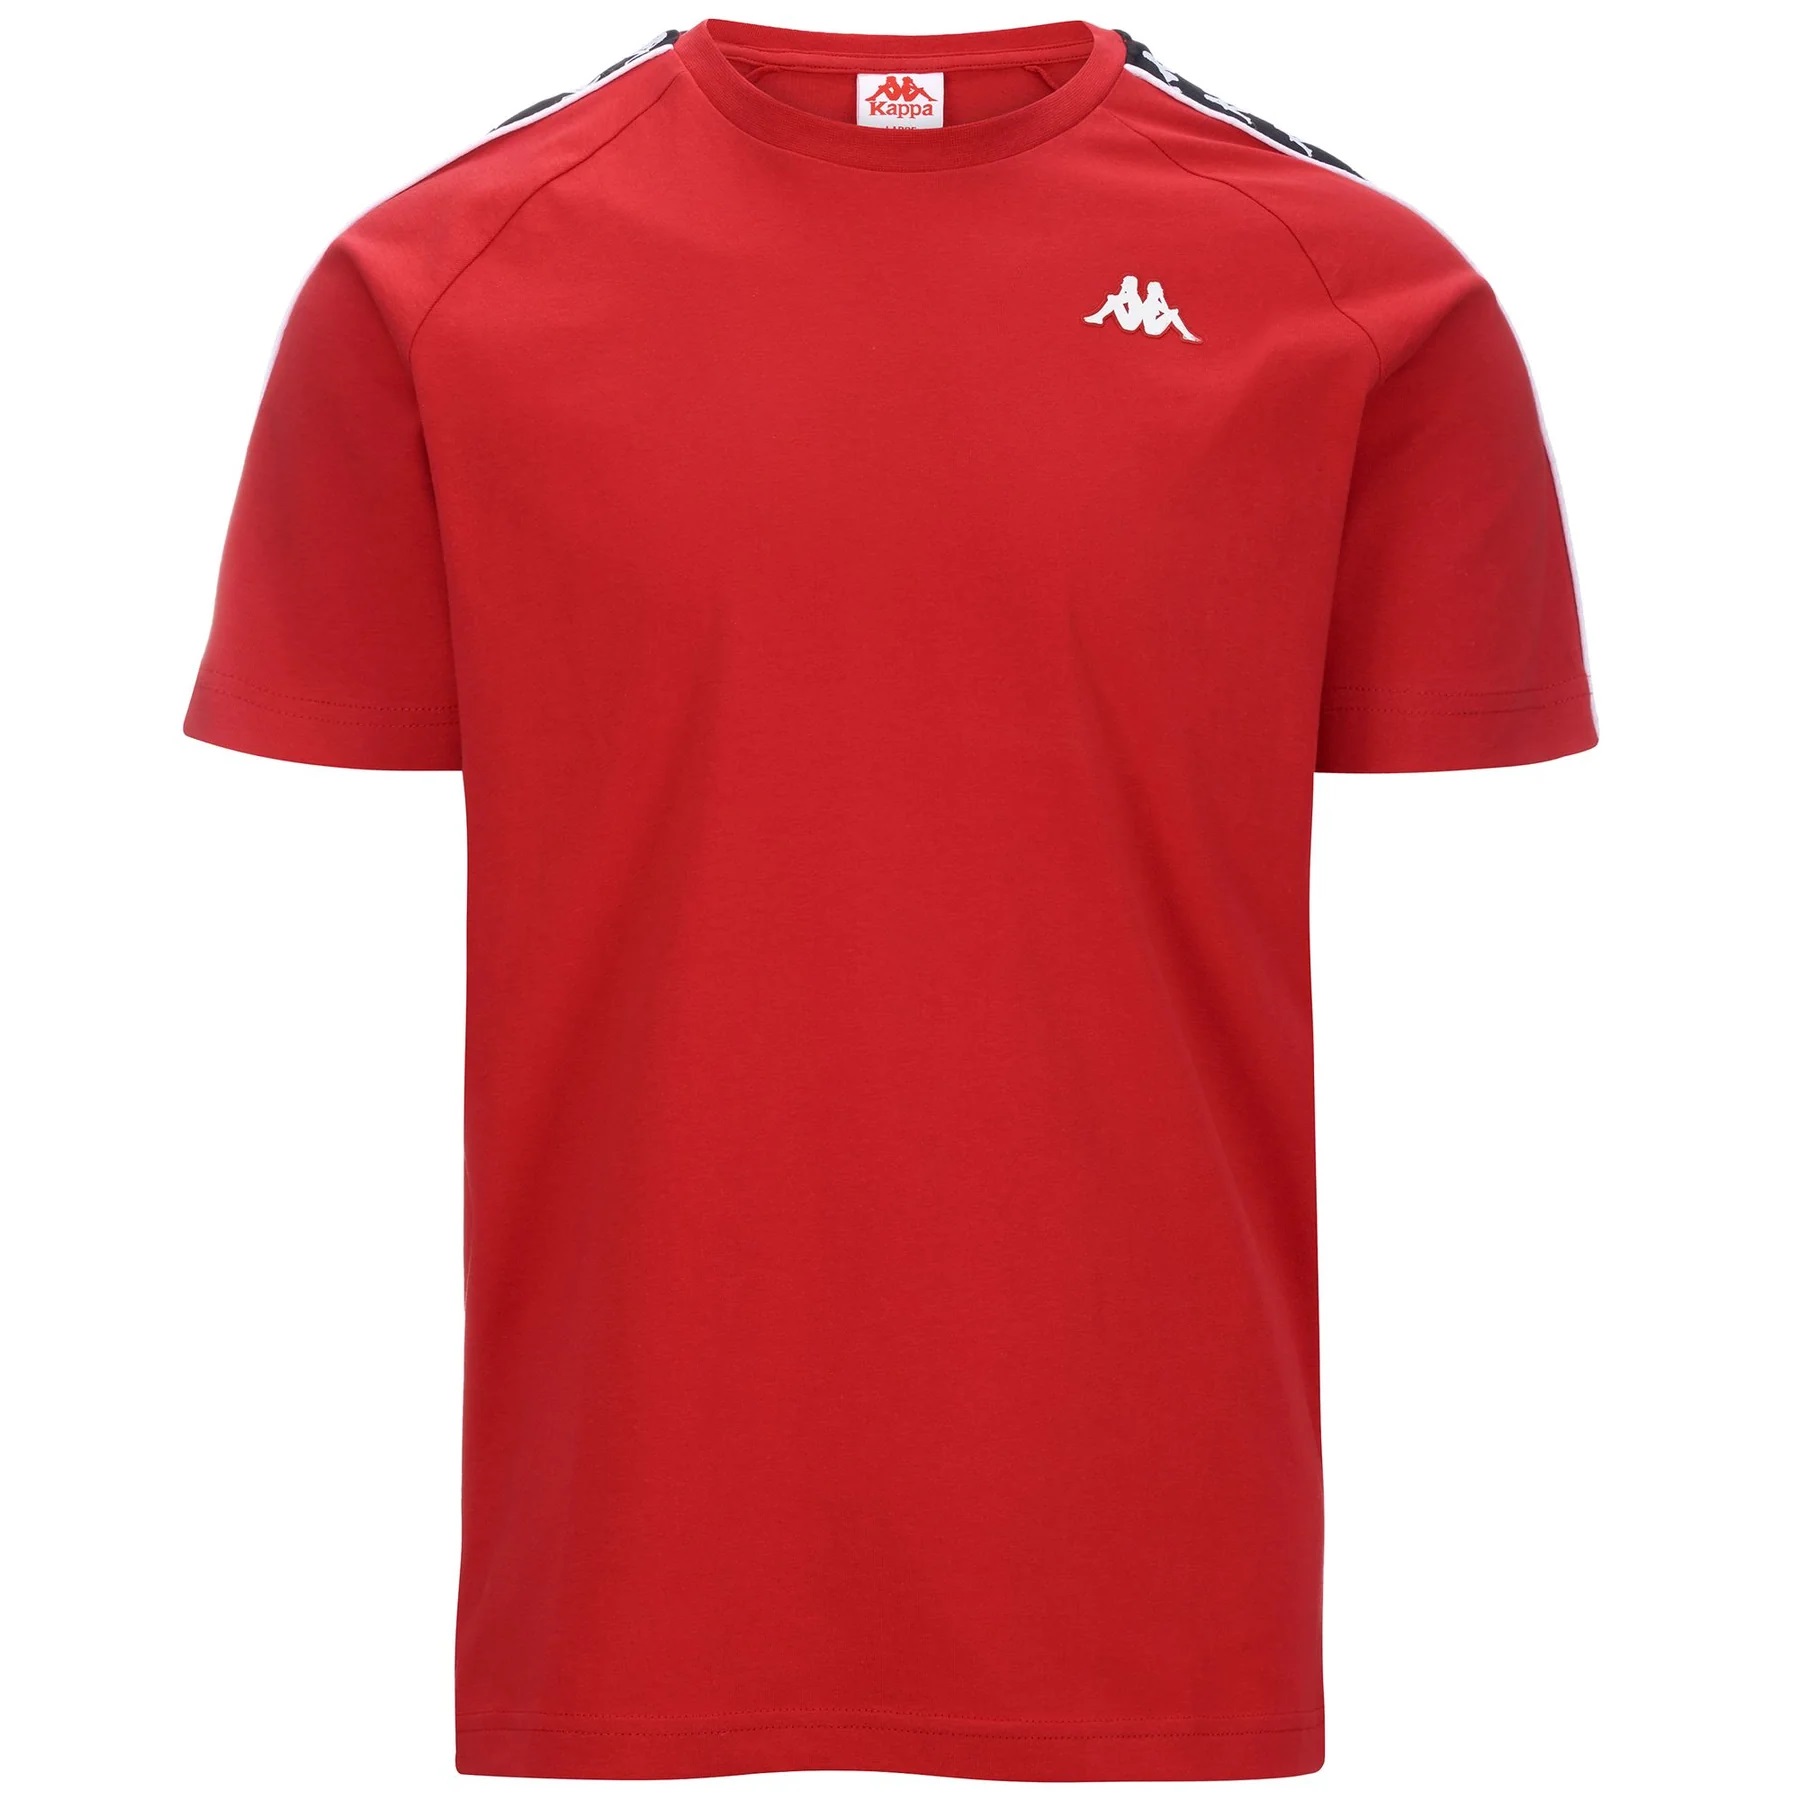 222 BANDA COEN SLIM tričko červená,černý pruh,bílé logo i proužky